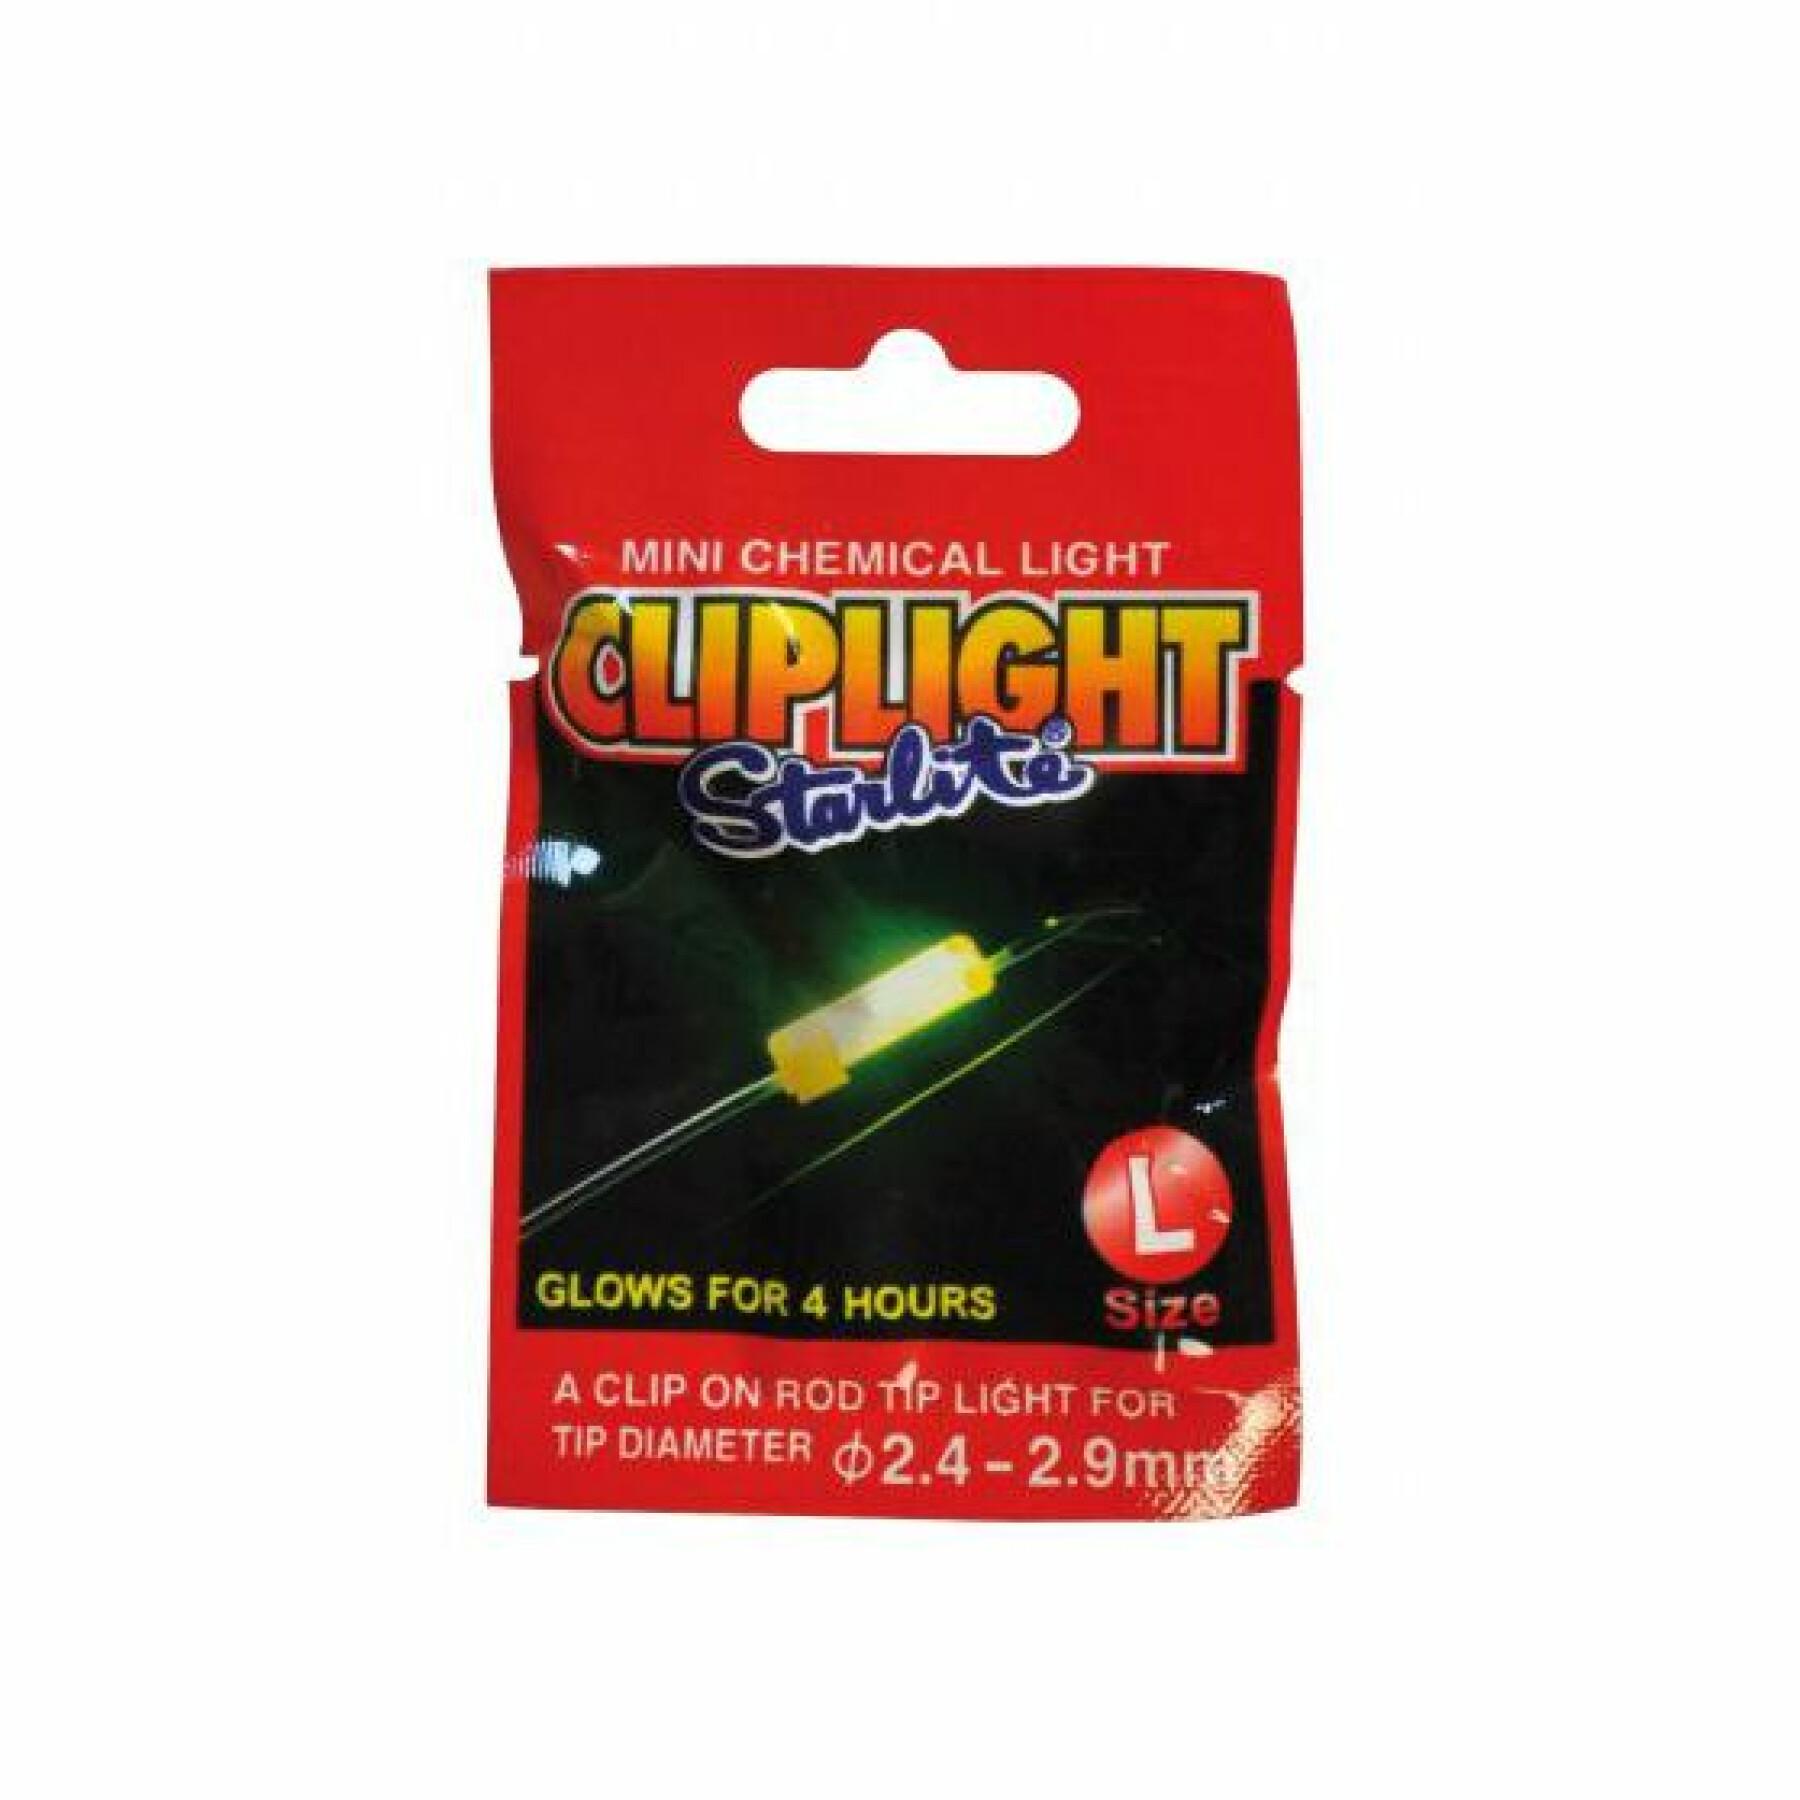 Lampe Tortue cliplight